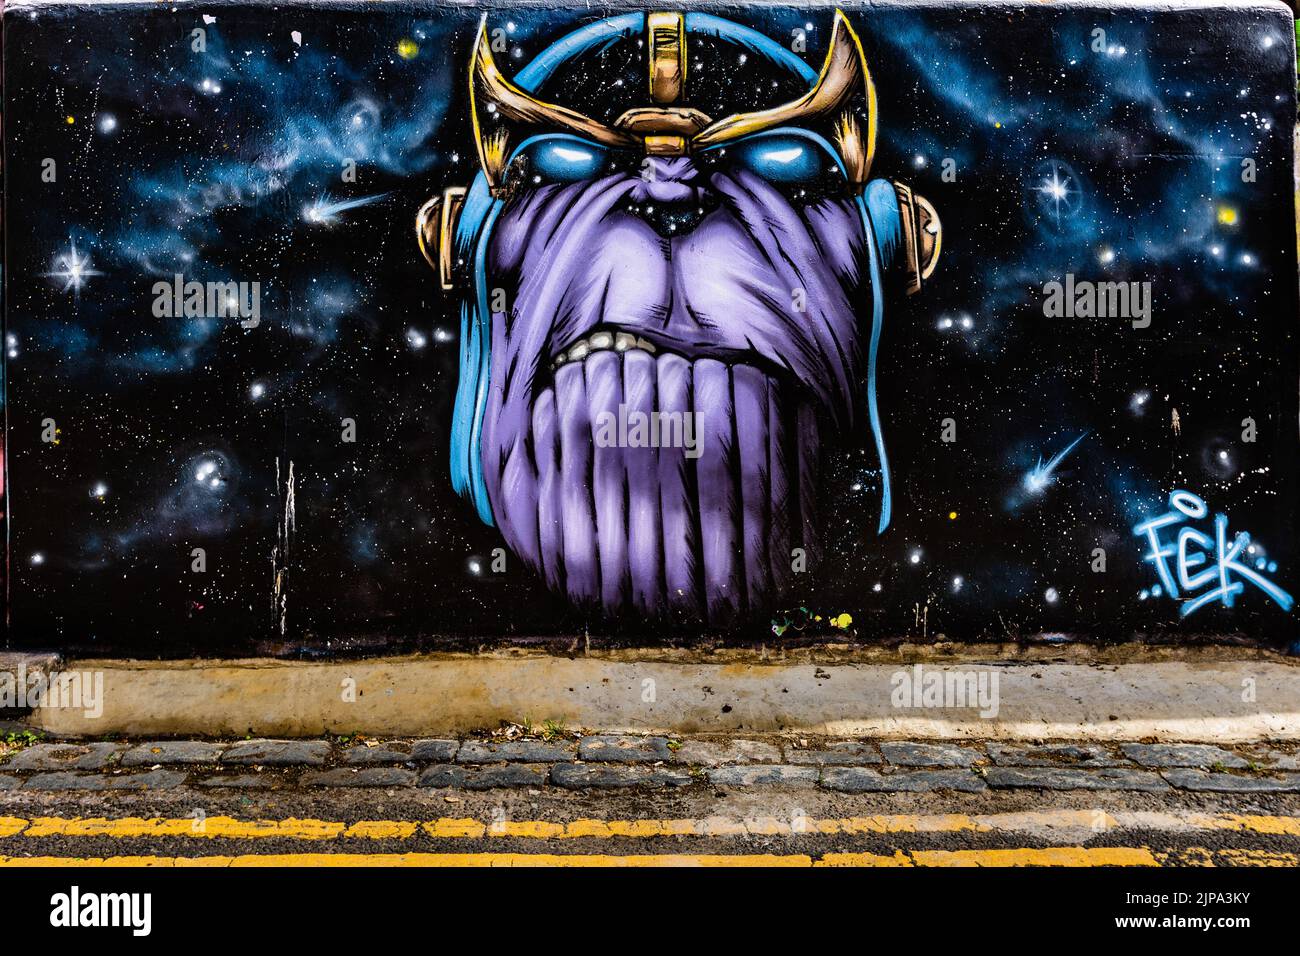 The Thanos comic book character graffiti in Trafalgar Lane Stock Photo